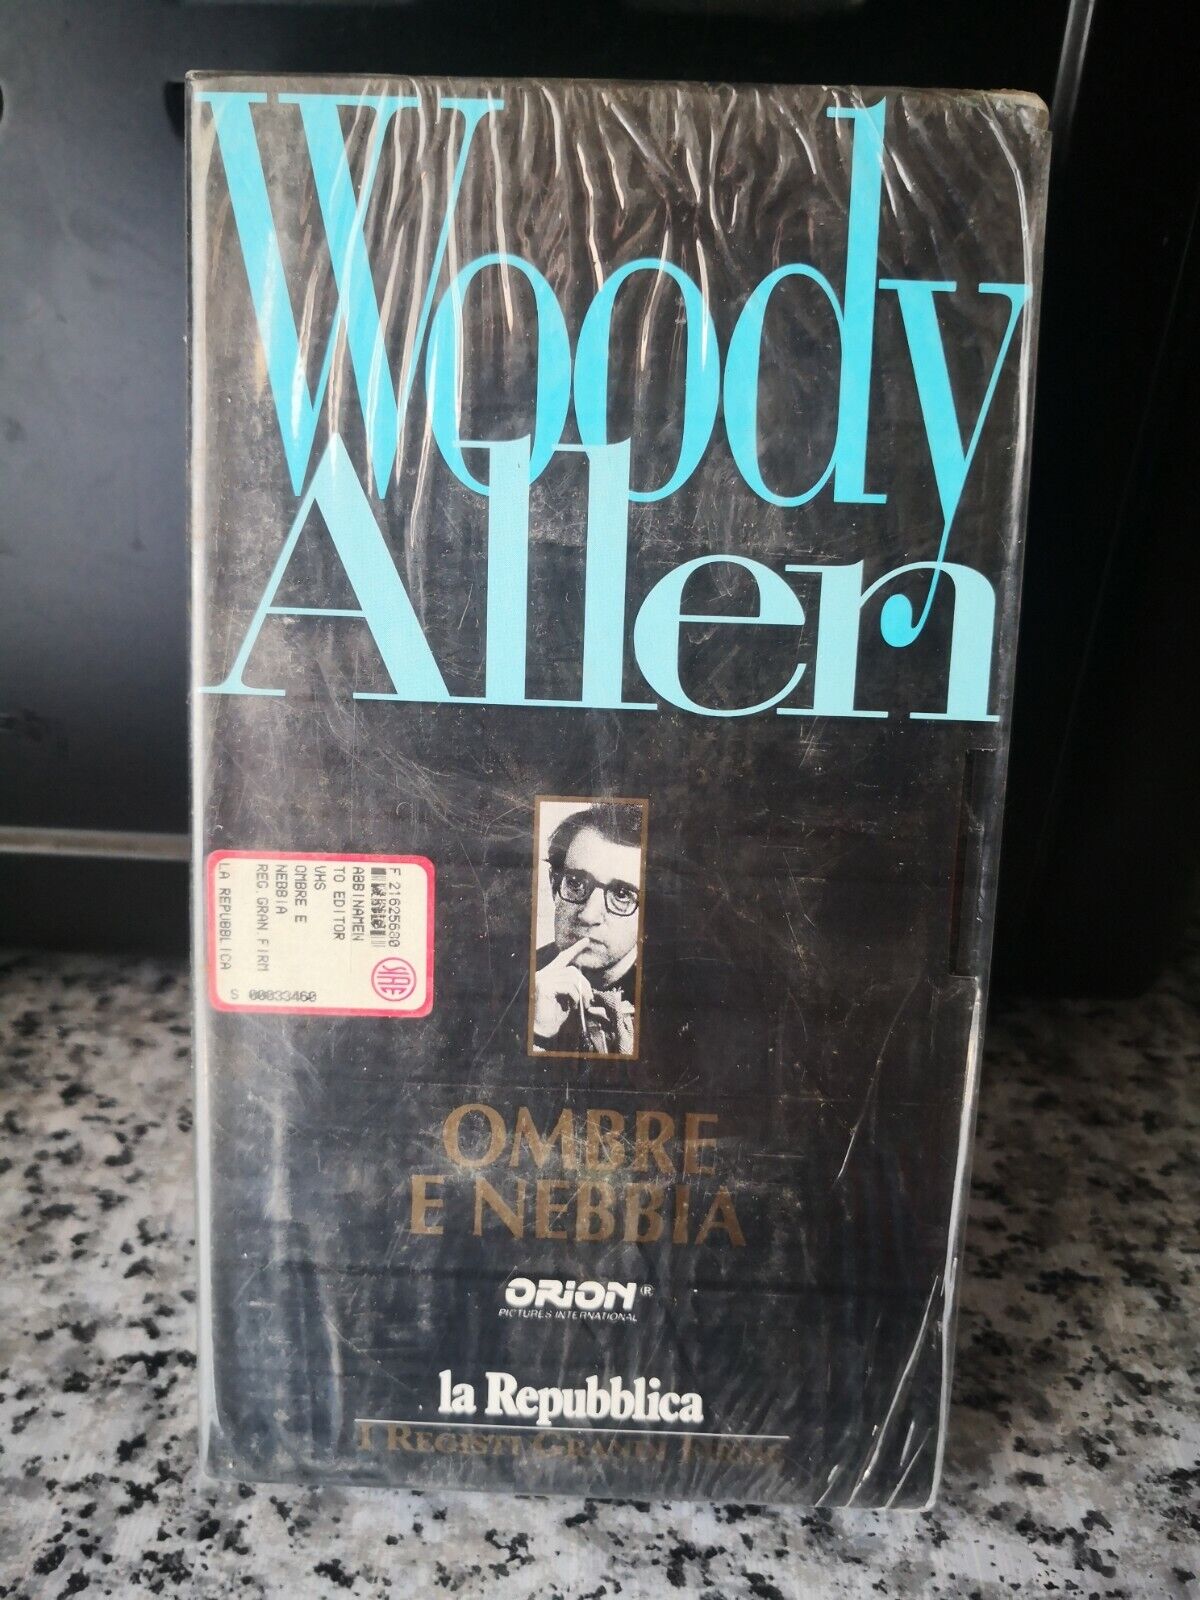 Woody Allen Ombre e nebbia - vhs - 1991 - Home Video -F